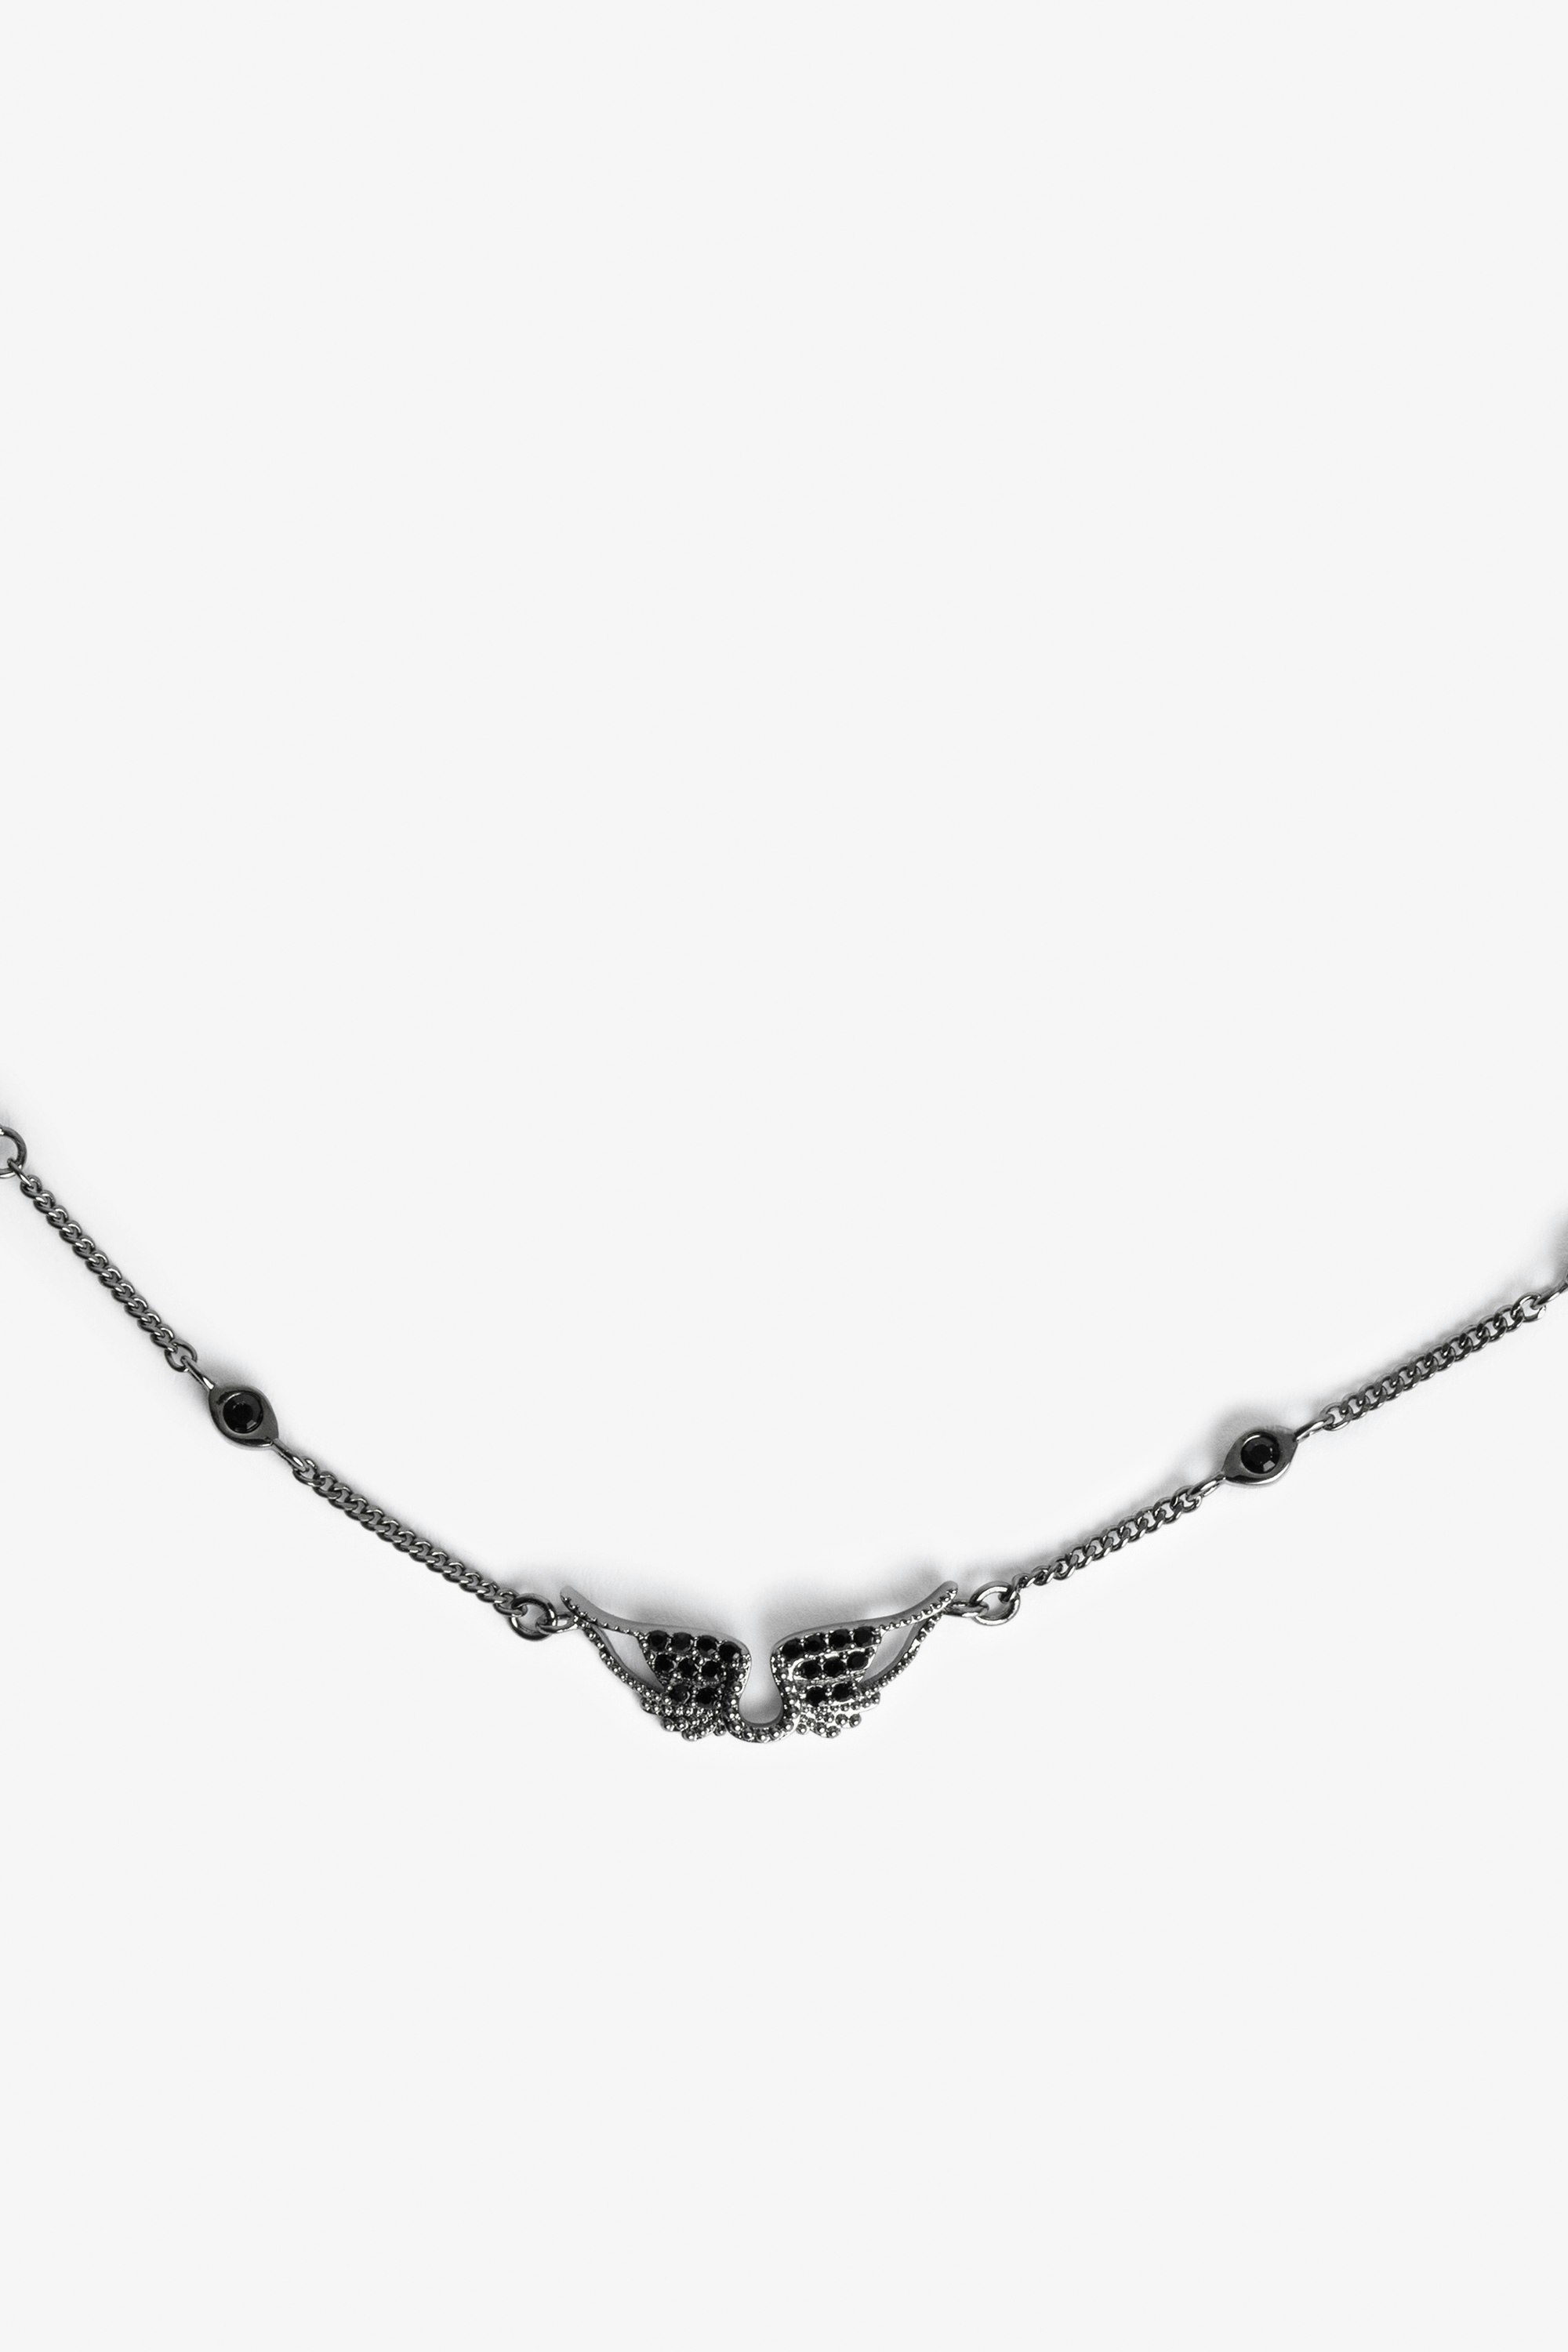 Rock Choker Necklace - Brass and rhinestone necklace.